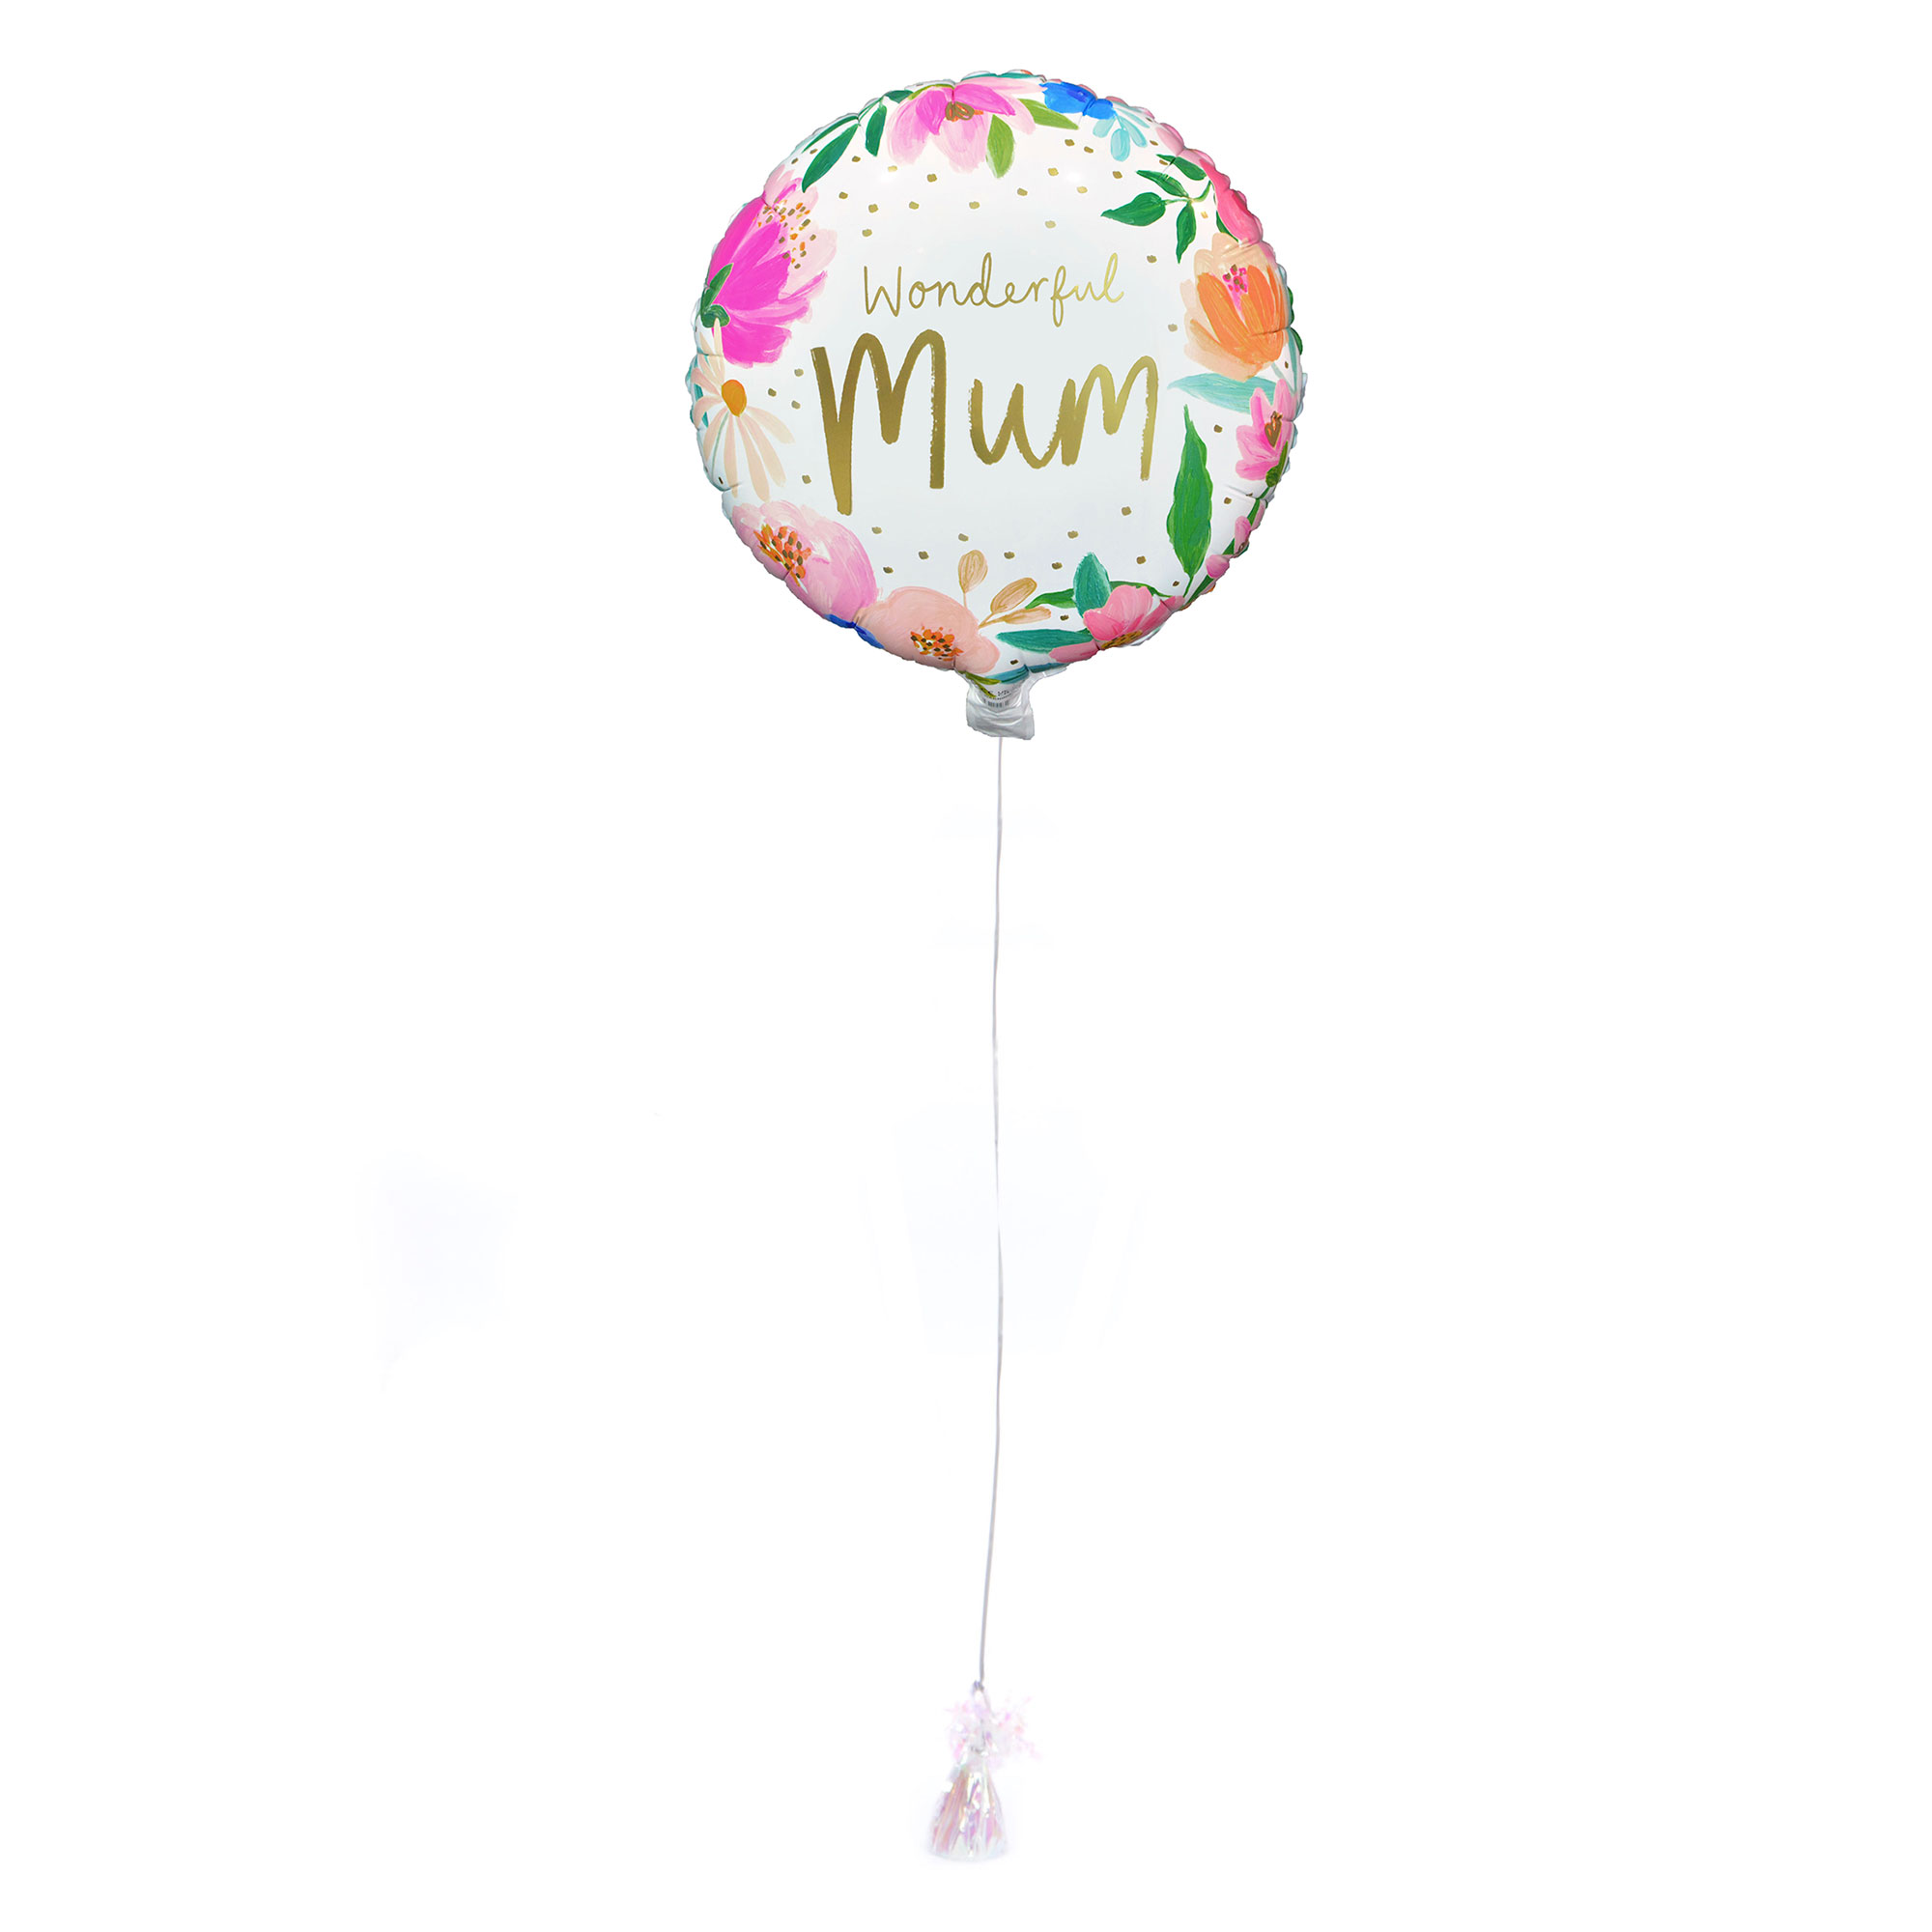 Wonderful Mum Balloon & Lindt Chocolates - FREE GIFT CARD!